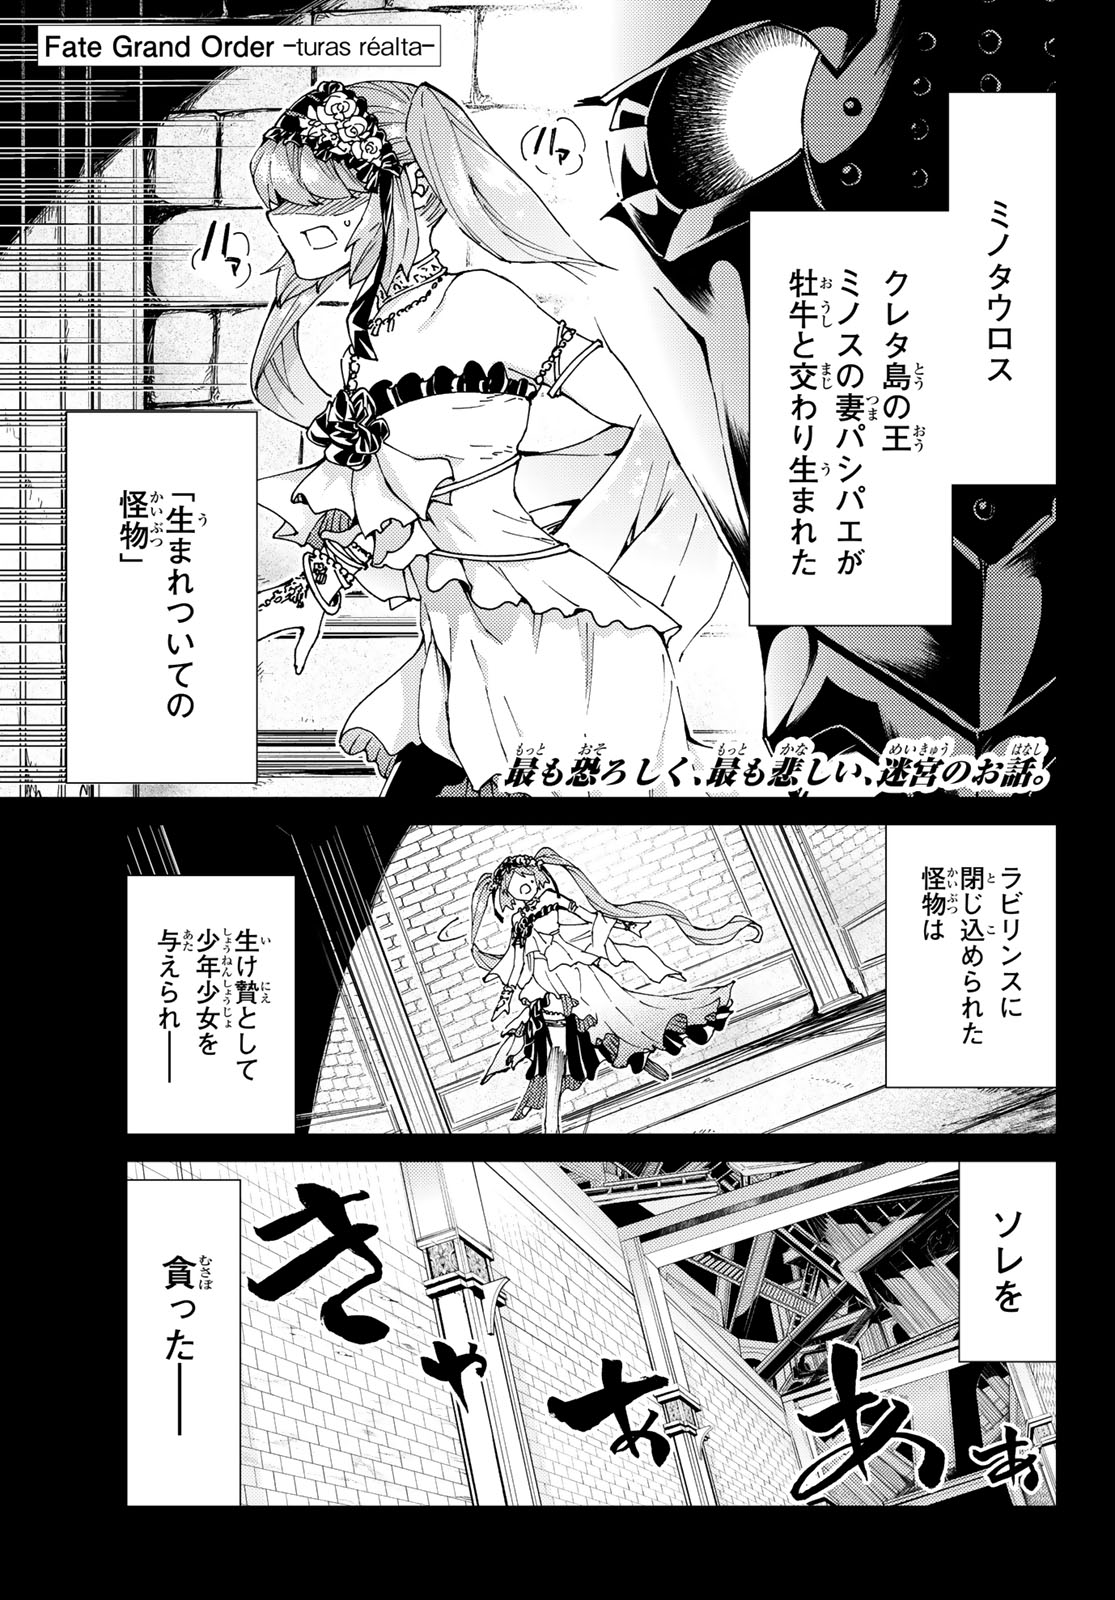 Fate/Grand Order -turas realta- 第23話 - Page 1